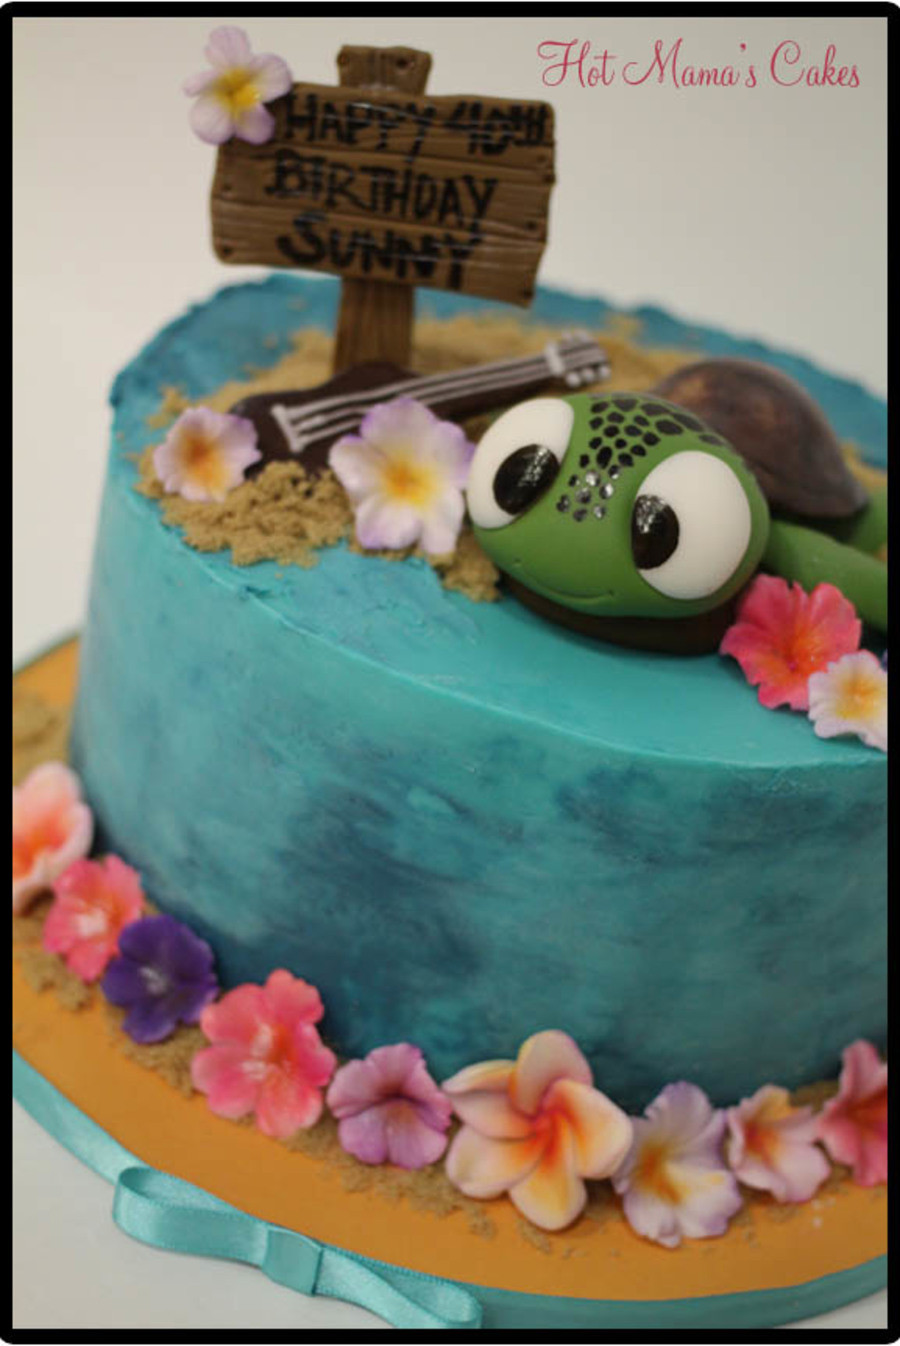 Best ideas about Hawaiian Birthday Cake
. Save or Pin Hawaiian Themed Birthday Cake CakeCentral Now.